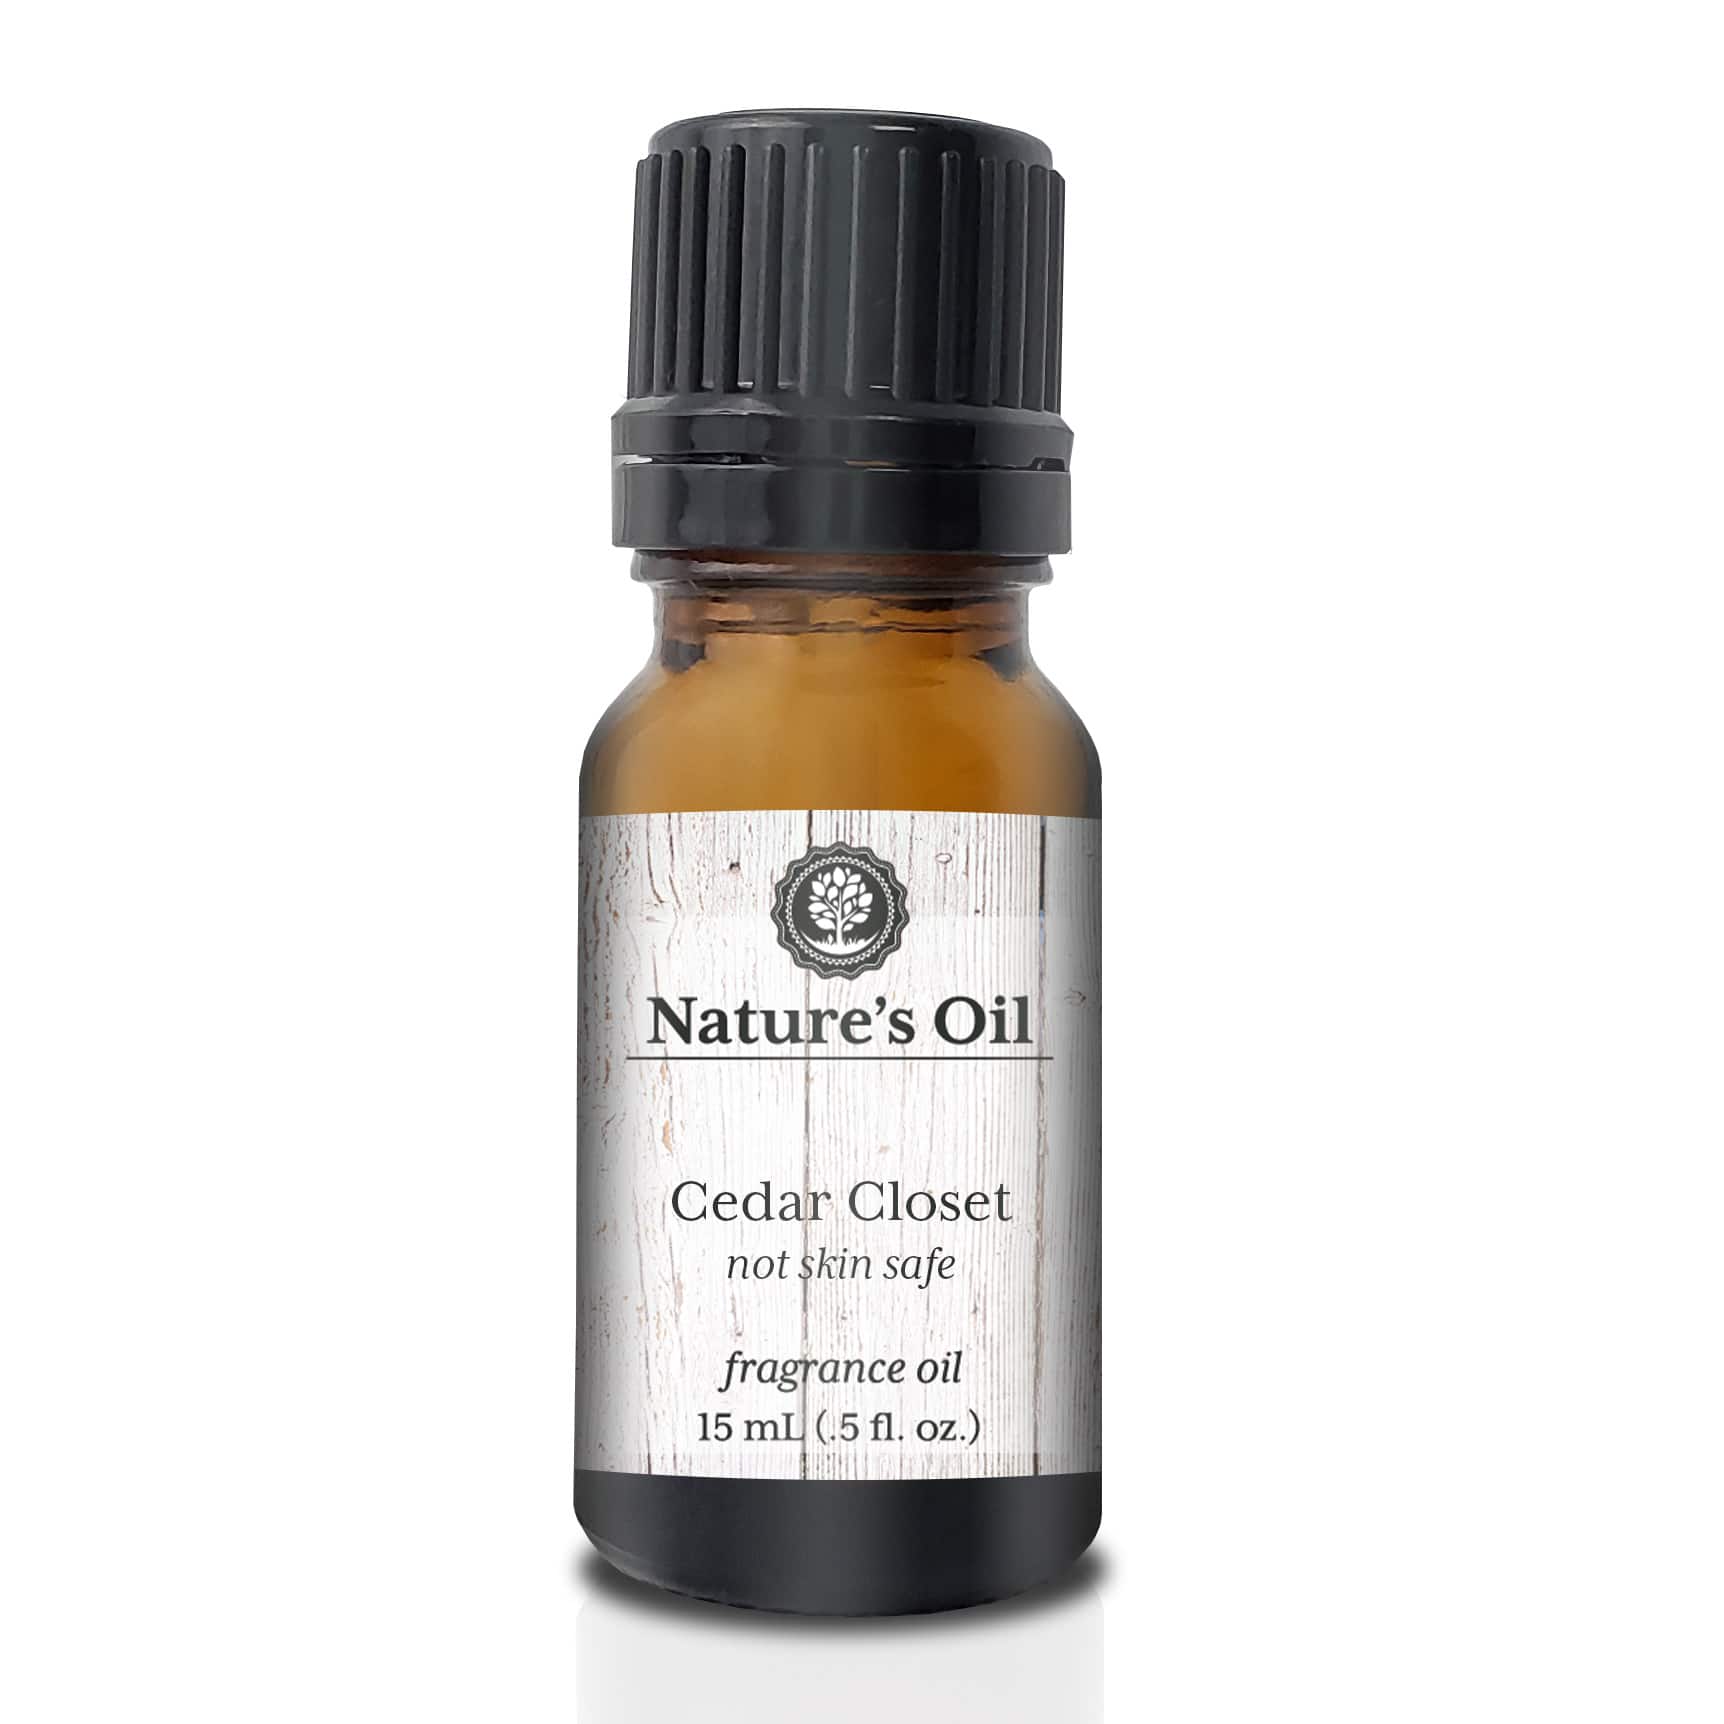 Nature's Oil Lavender Vanilla Fragrance Oil | 60 | Michaels